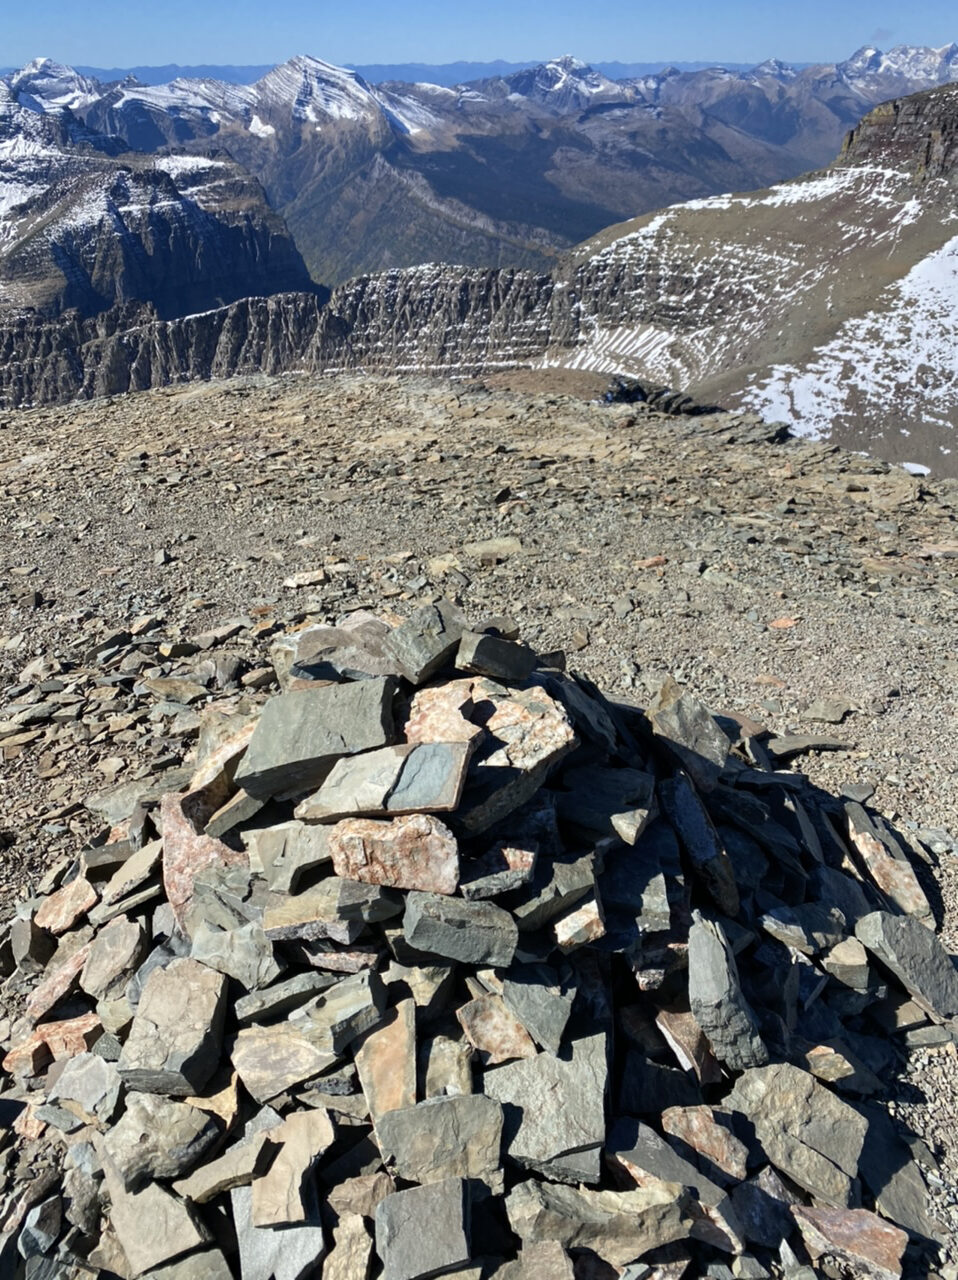 Pile of rocks at mountain summit